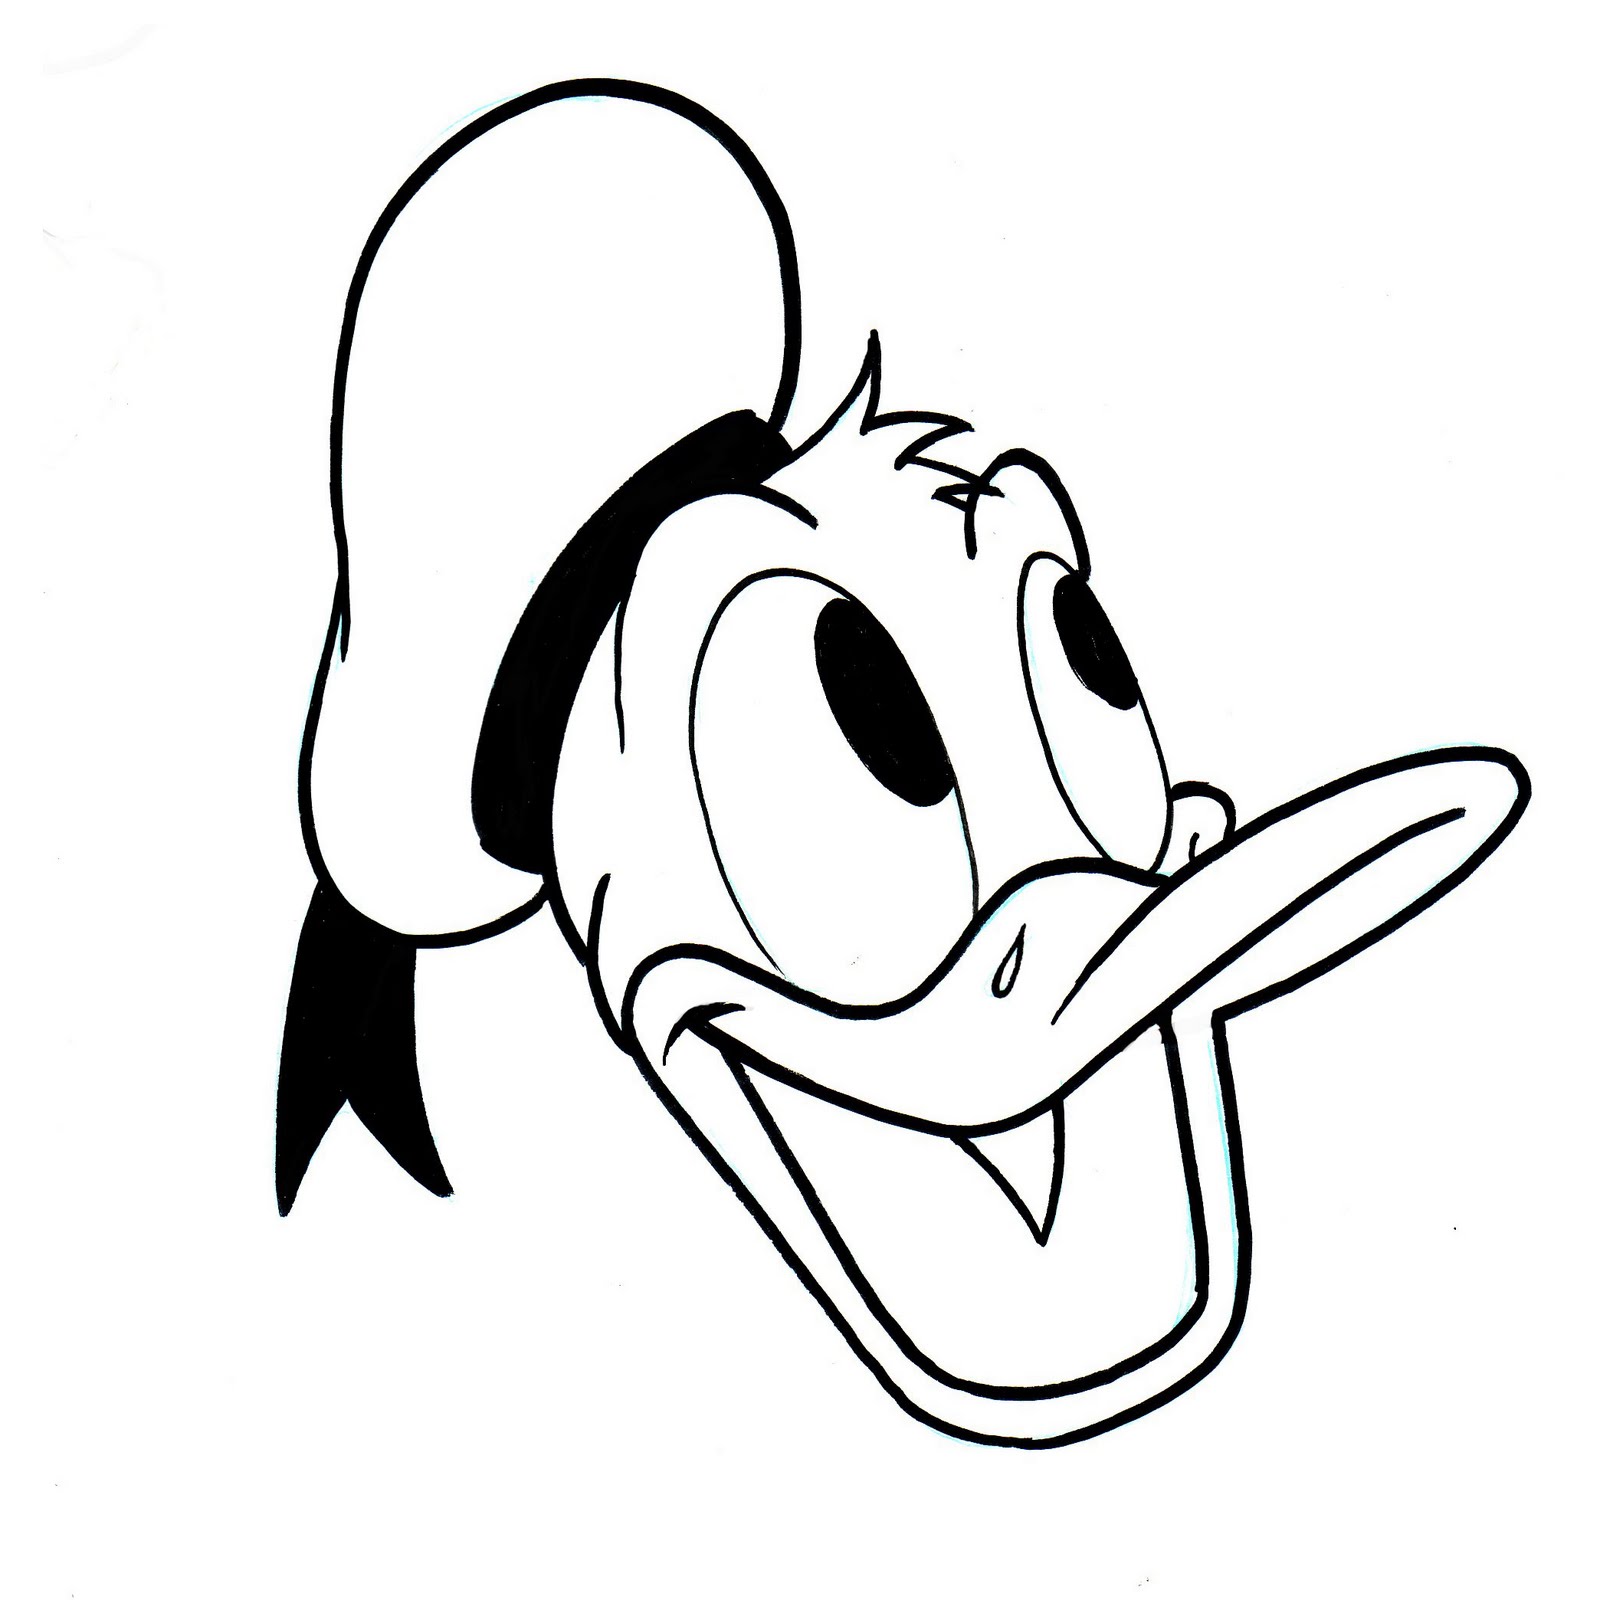 Donald duck head clipart